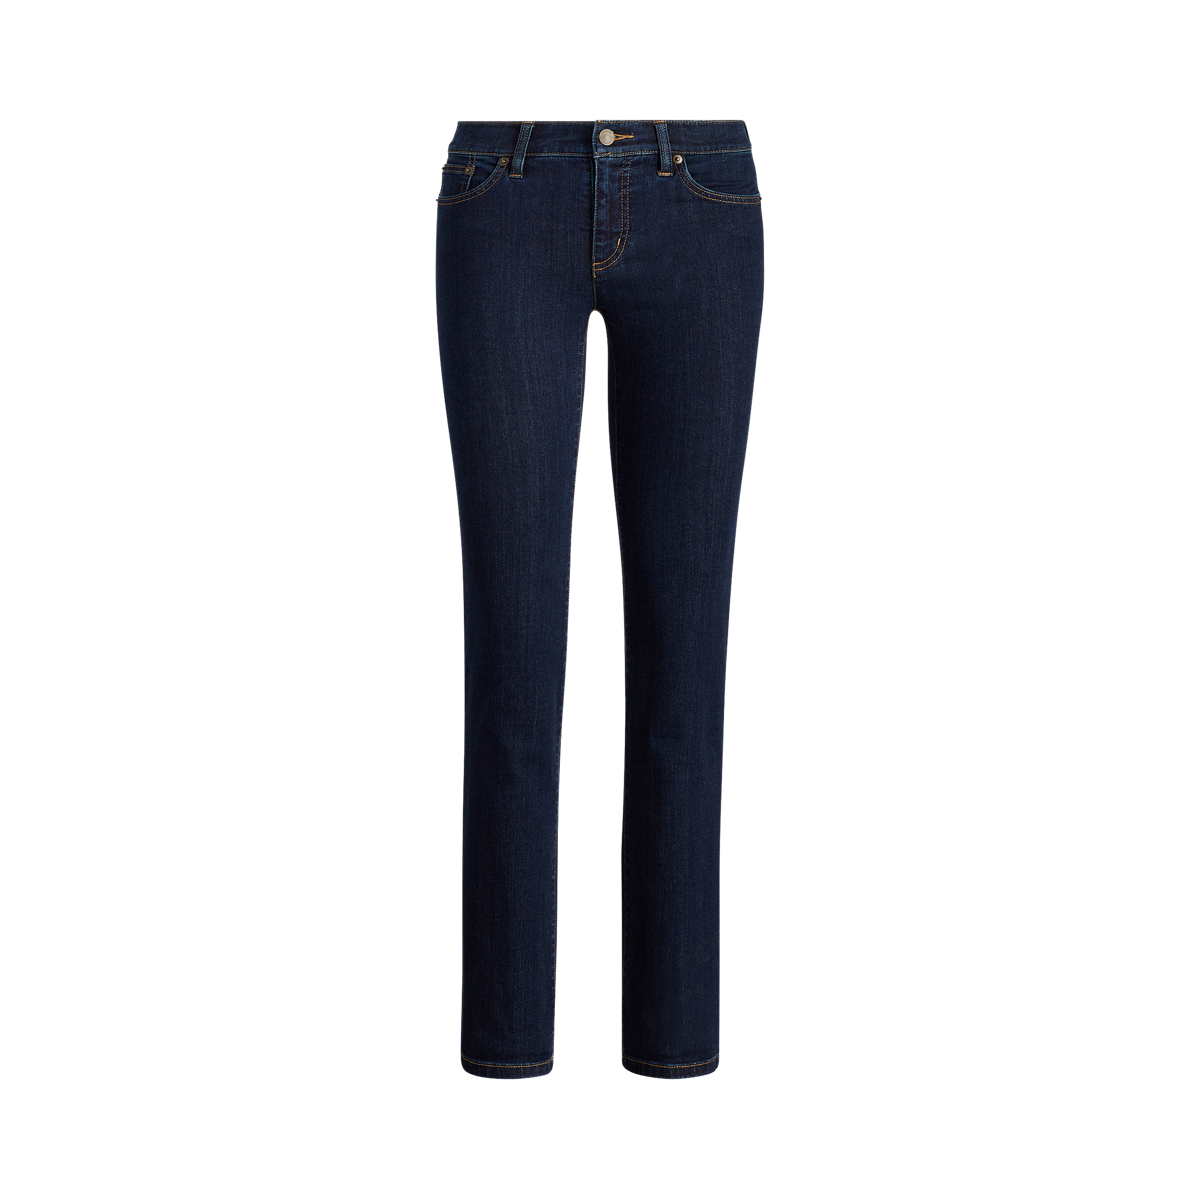 Aprender acerca 60+ imagen polo ralph lauren classic straight jeans